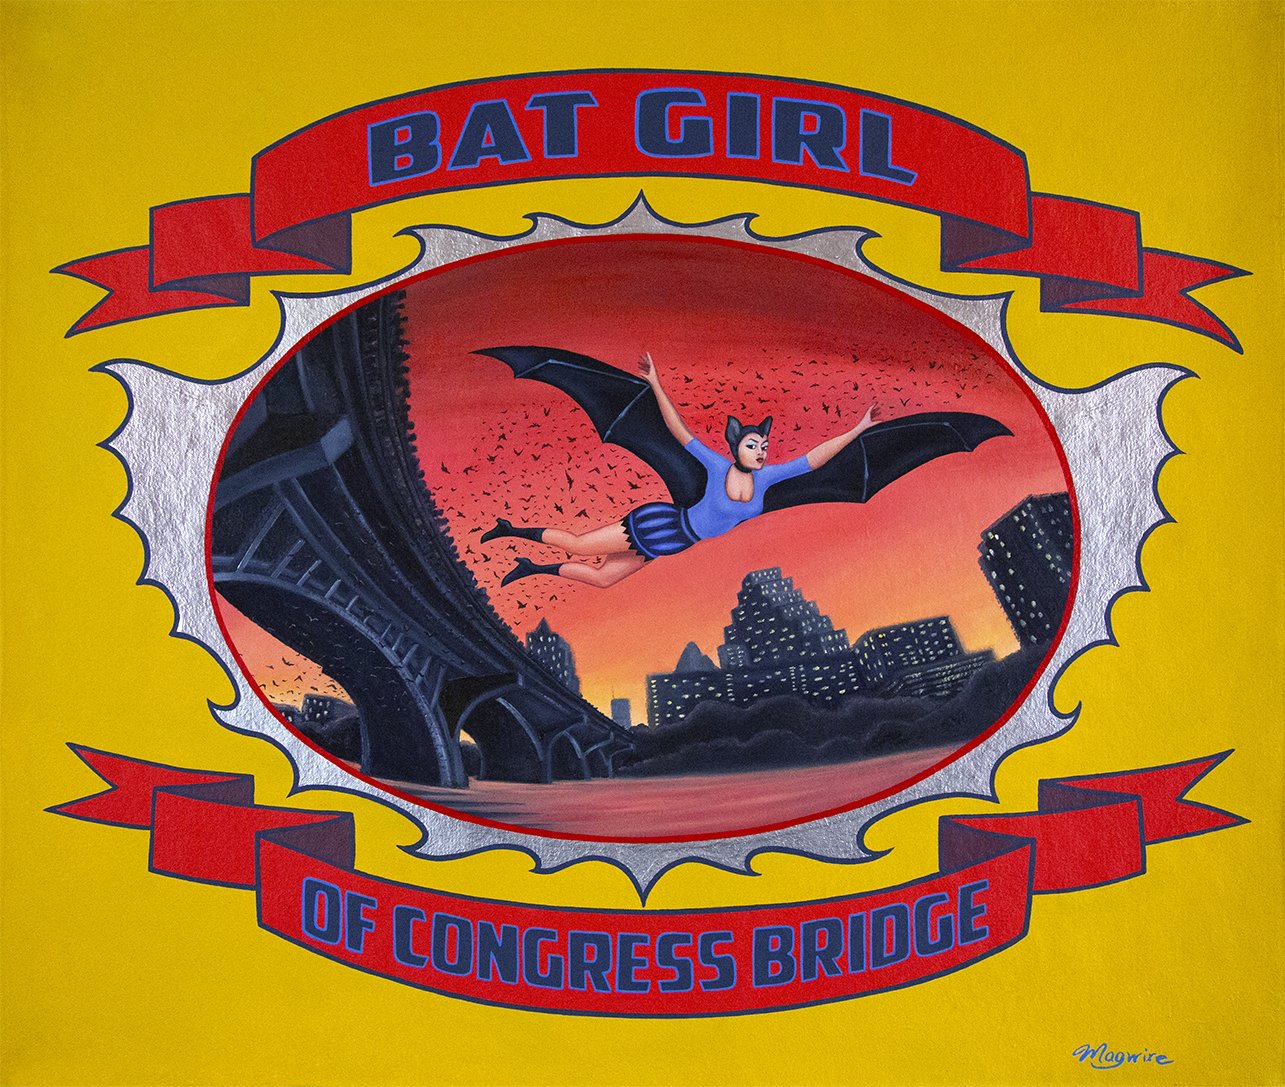 Bat Girl of Congress Bridge (SM)